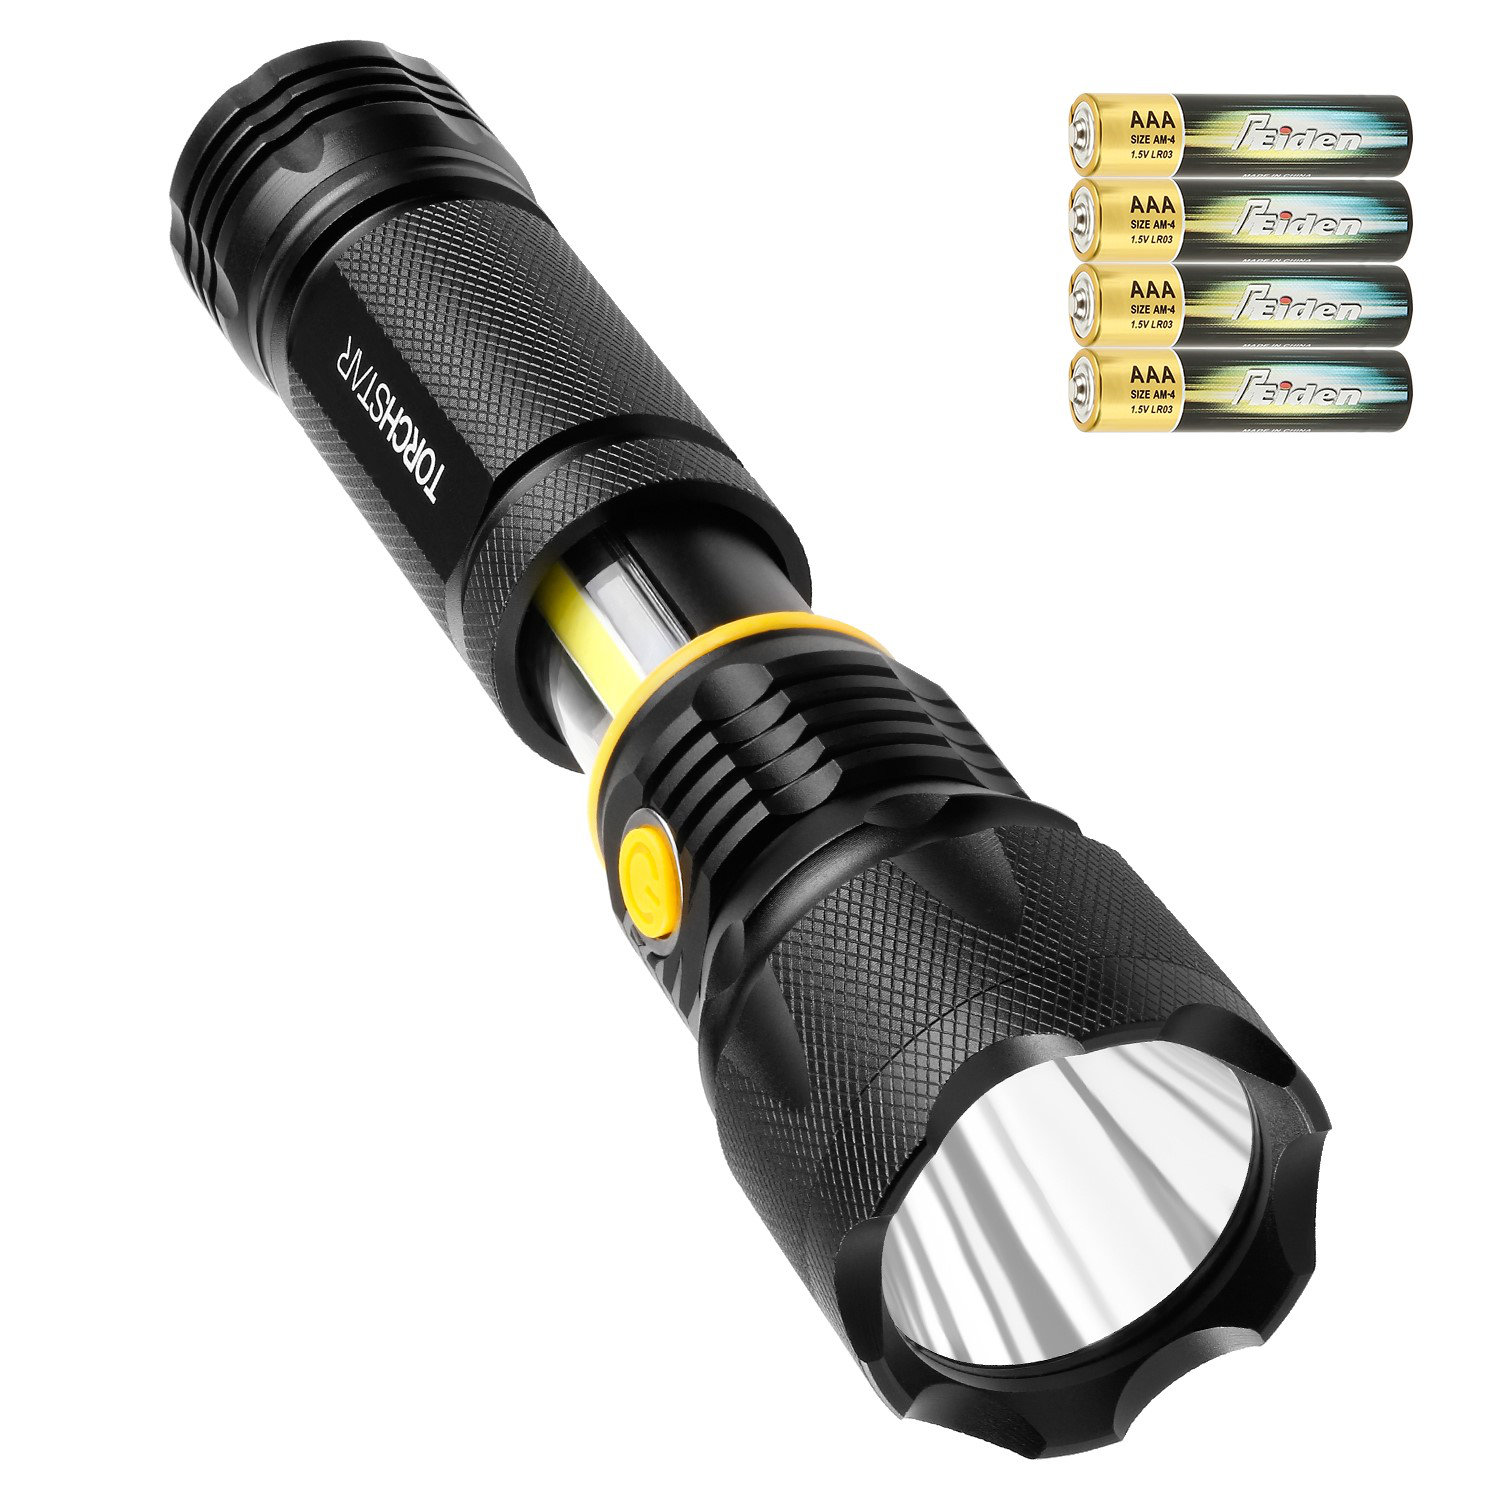 TORCHSTAR LED 300 Lumens Flashlight, Adult Unisex, Size: Small, Black